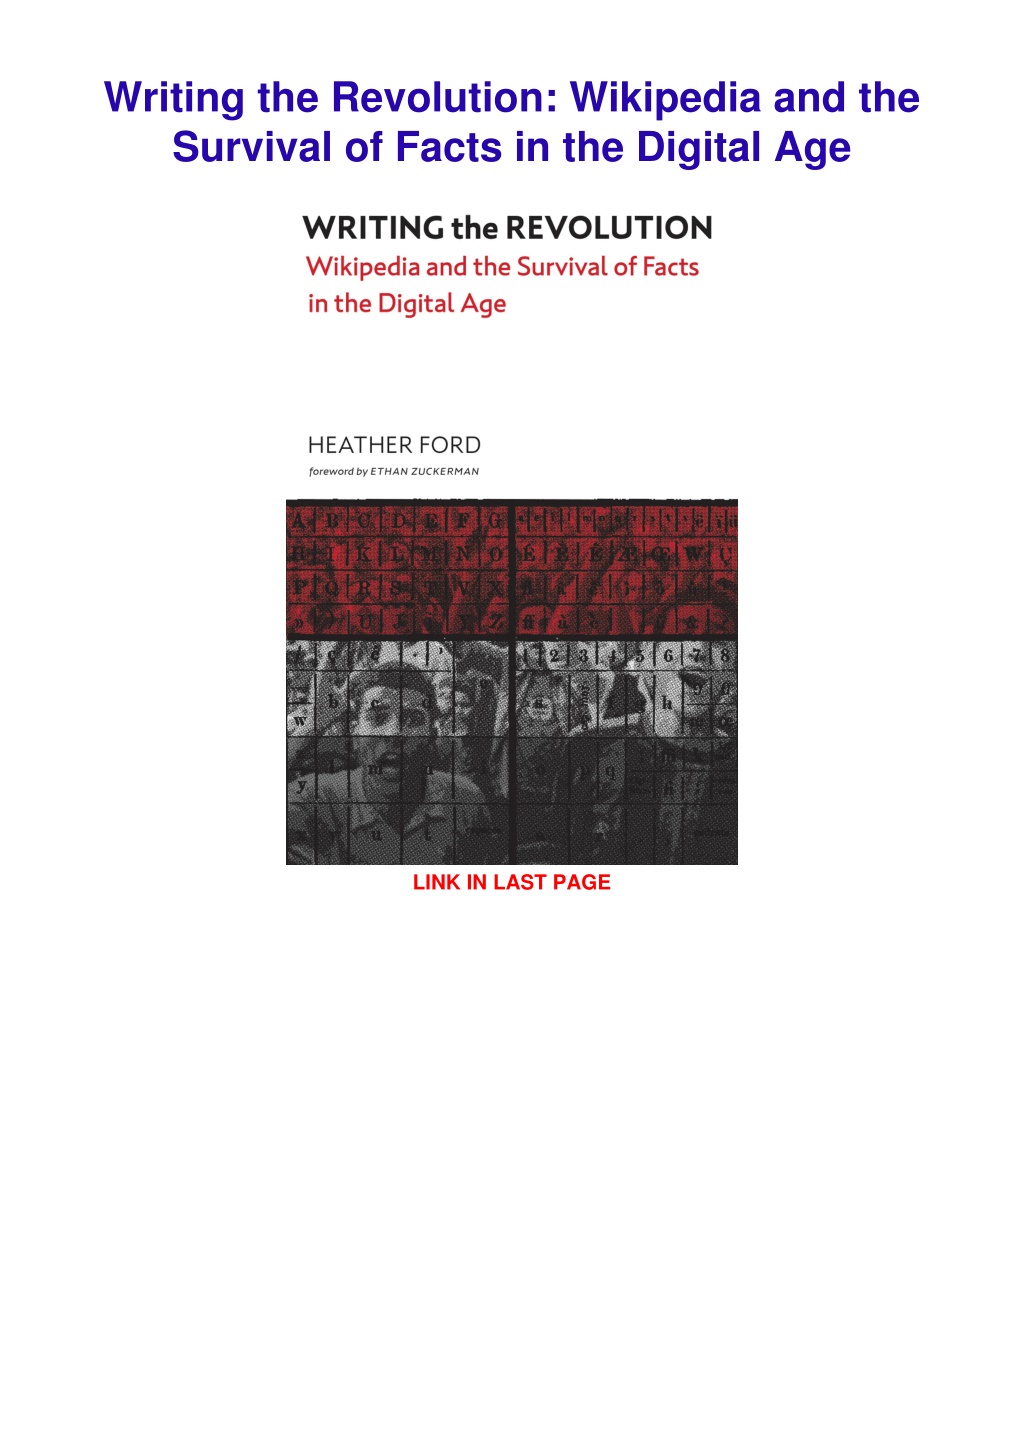 Revolution! - Wikipedia